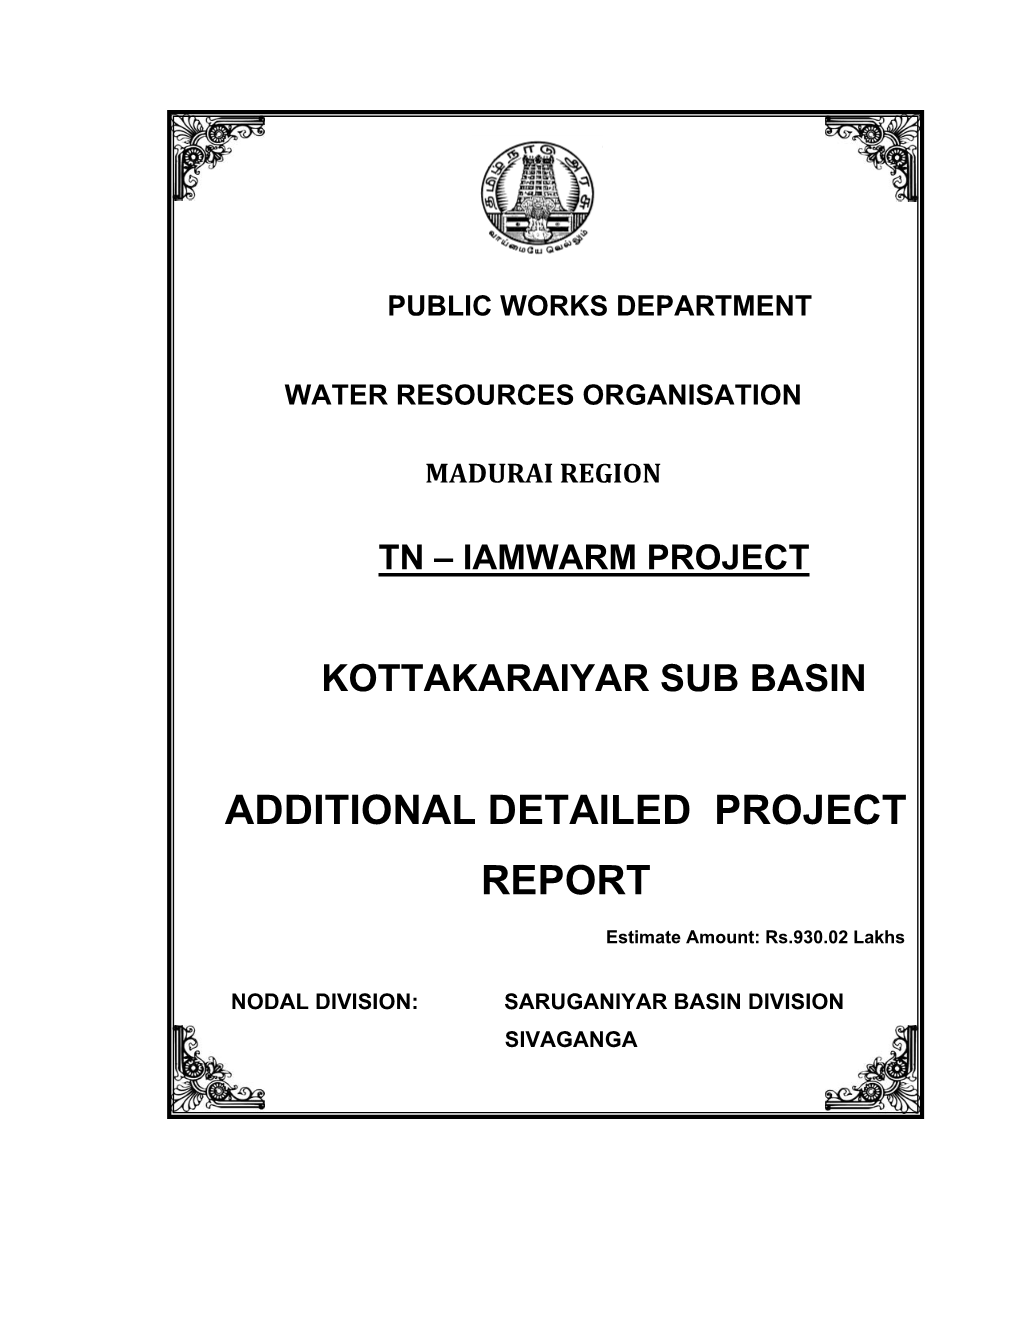 Kottakaraiyar Sub Basin